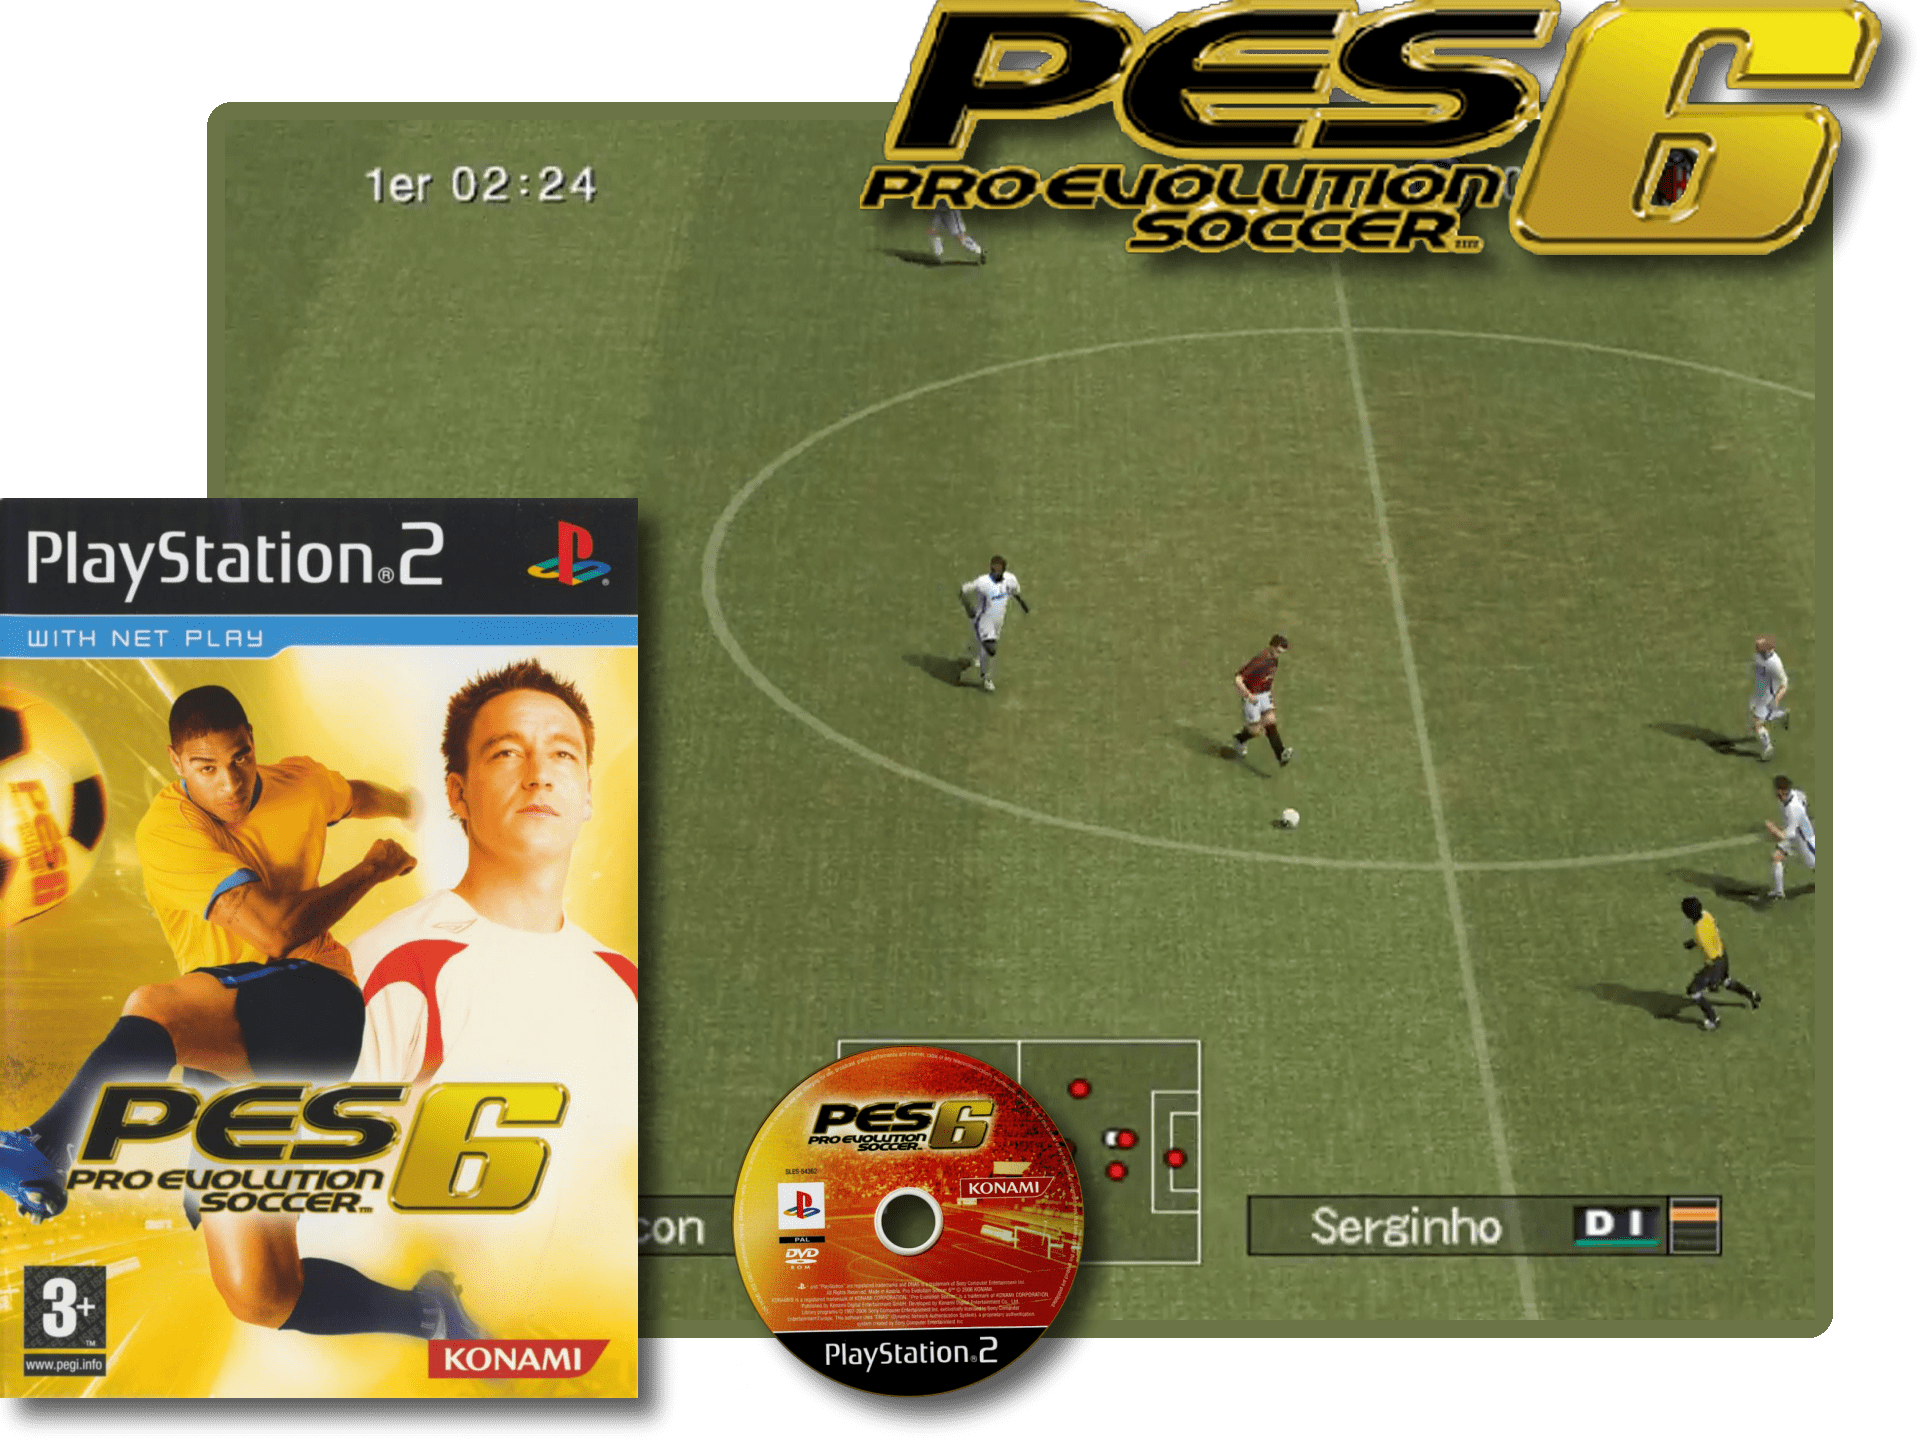 PES 2011: Pro Evolution Soccer ROM & ISO - PS2 Game